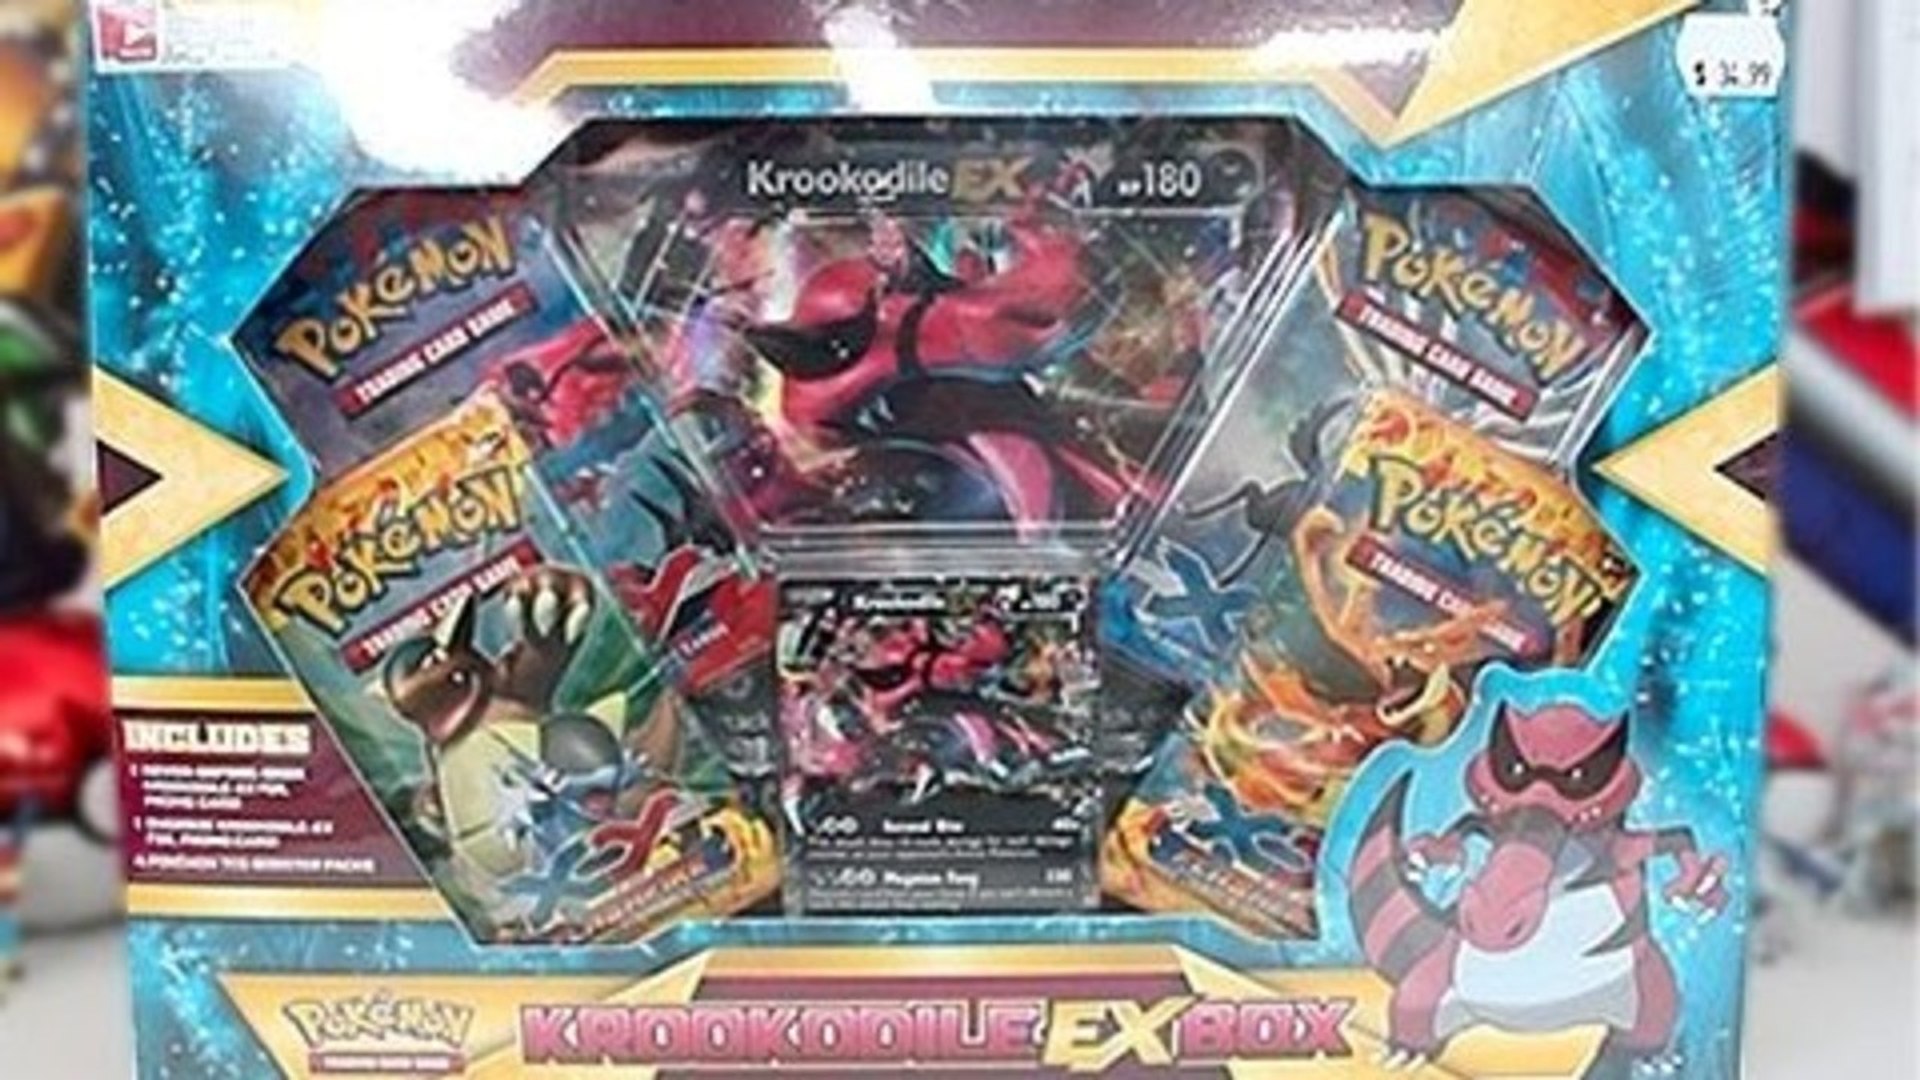 Pokemon Shiny Rayquaza EX Box Opening 